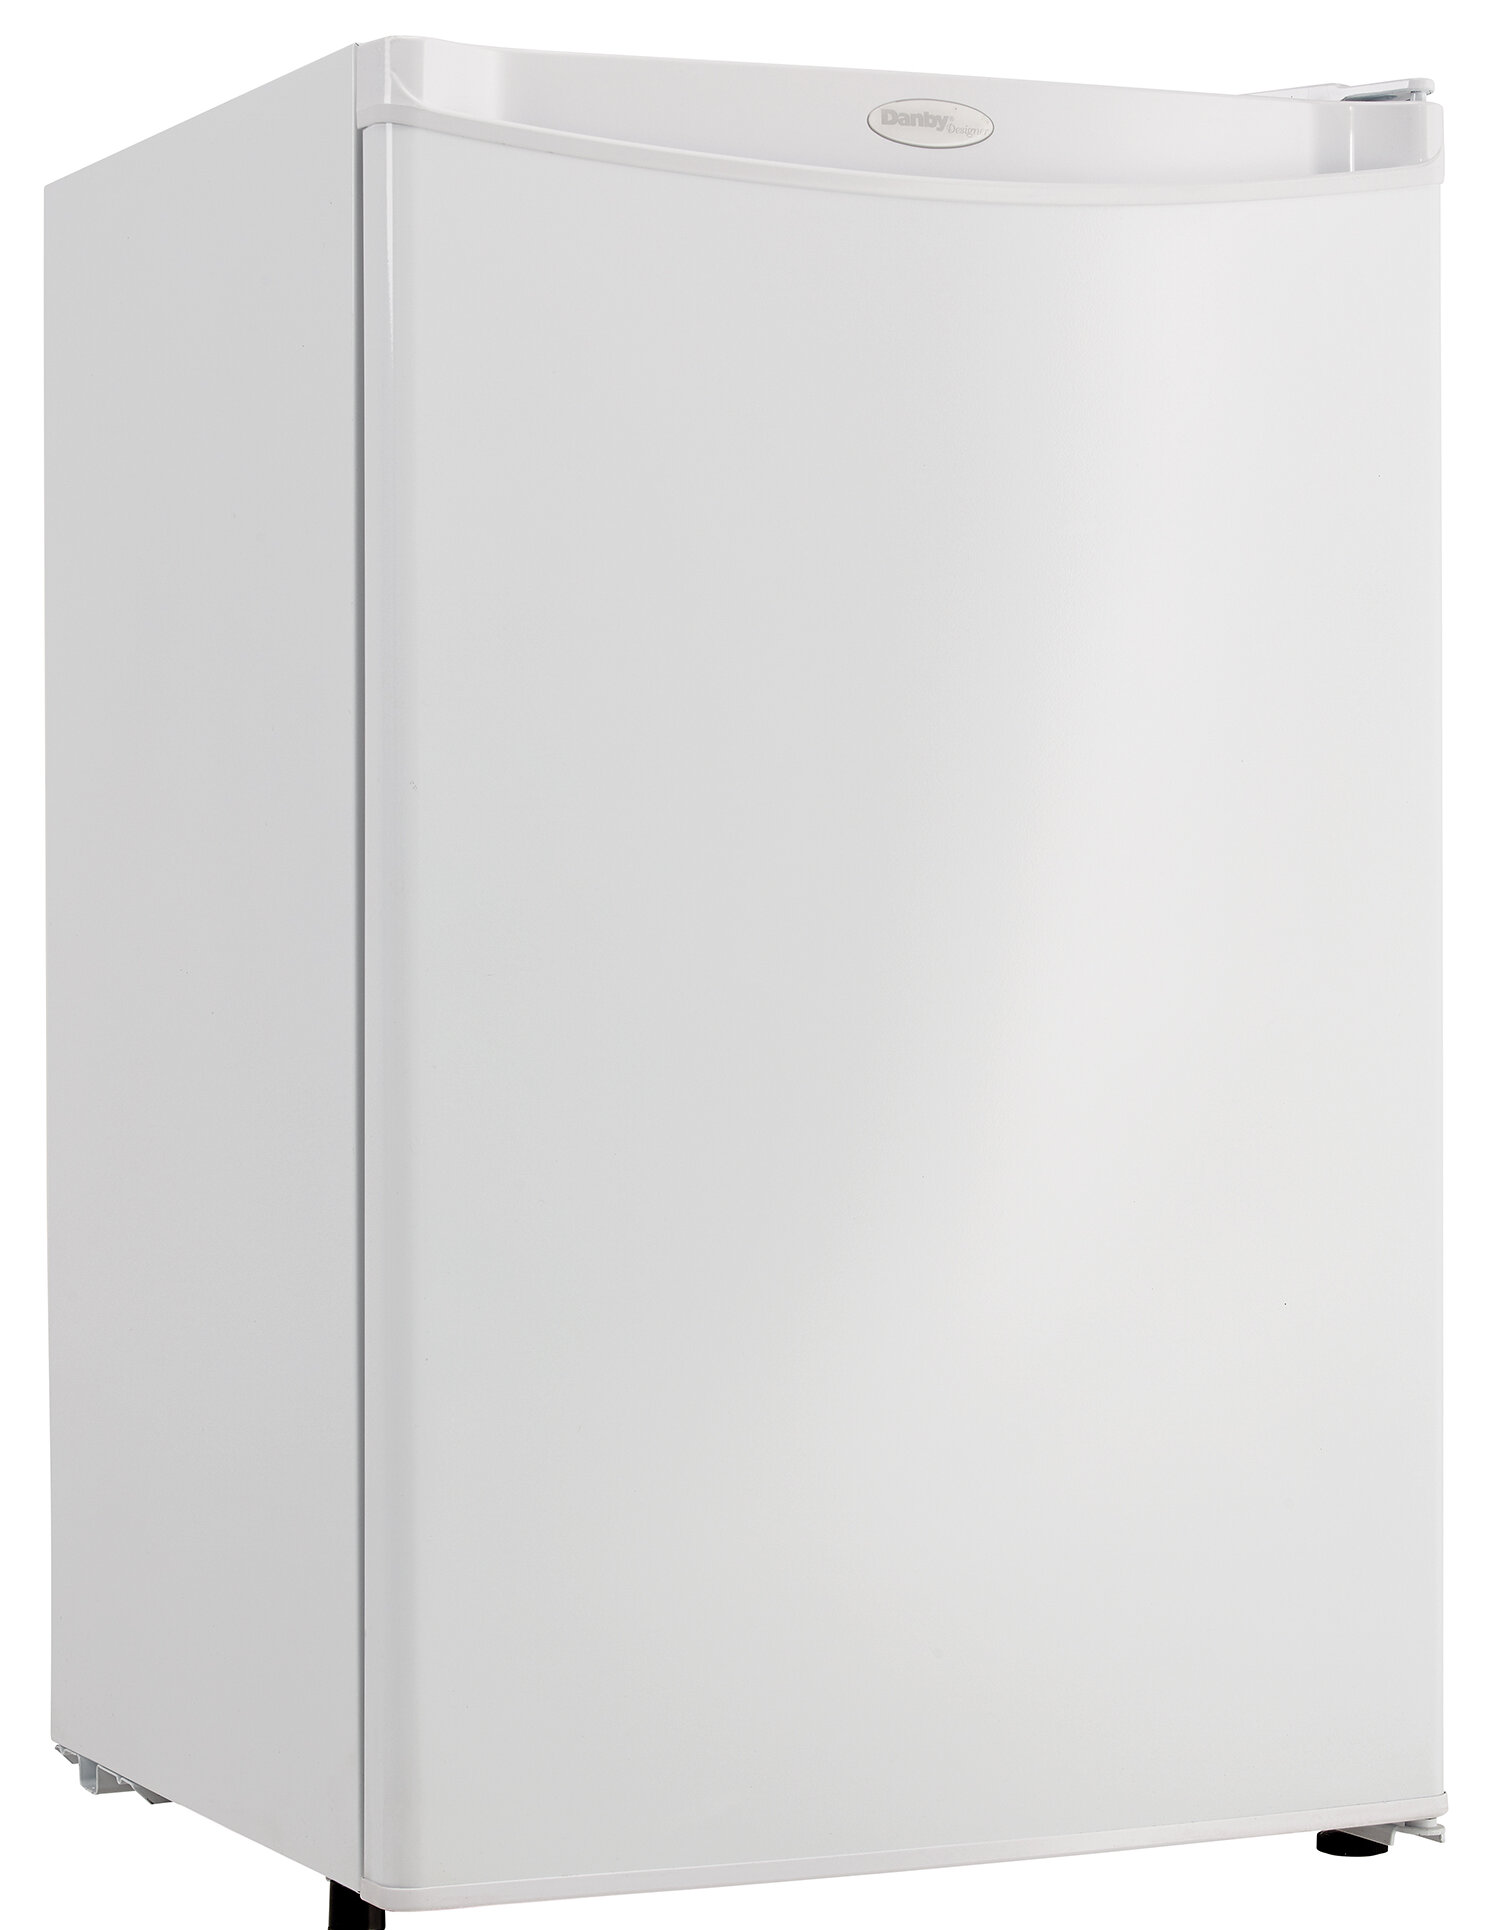 17+ Danby designer mini fridge wattage information